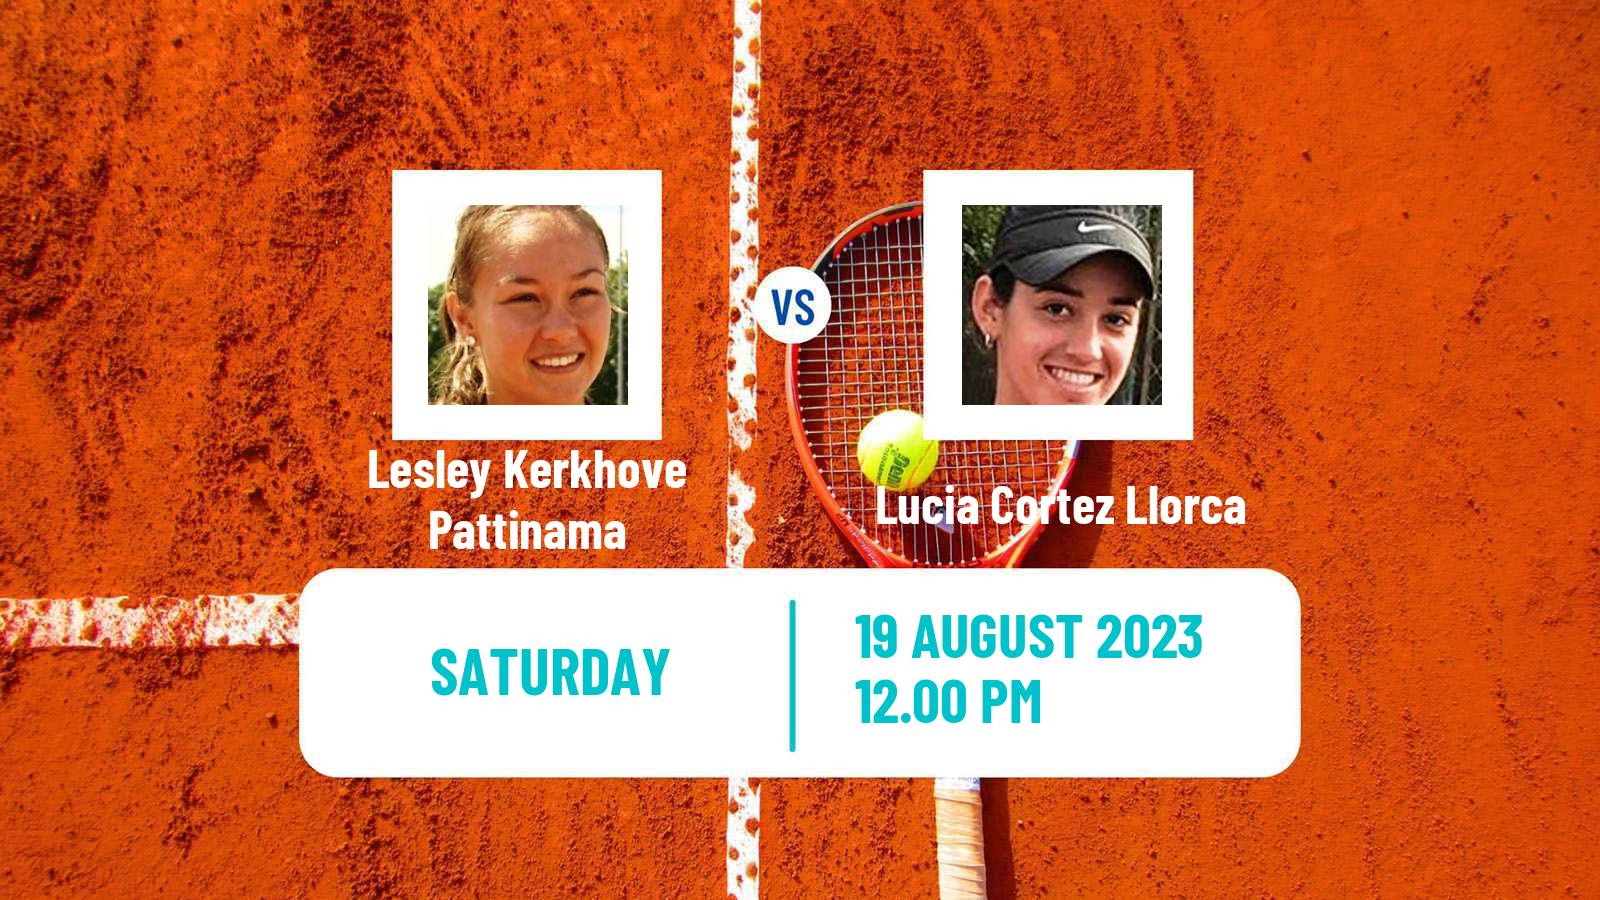 Tennis ITF W25 Ourense Women Lesley Kerkhove Pattinama - Lucia Cortez Llorca